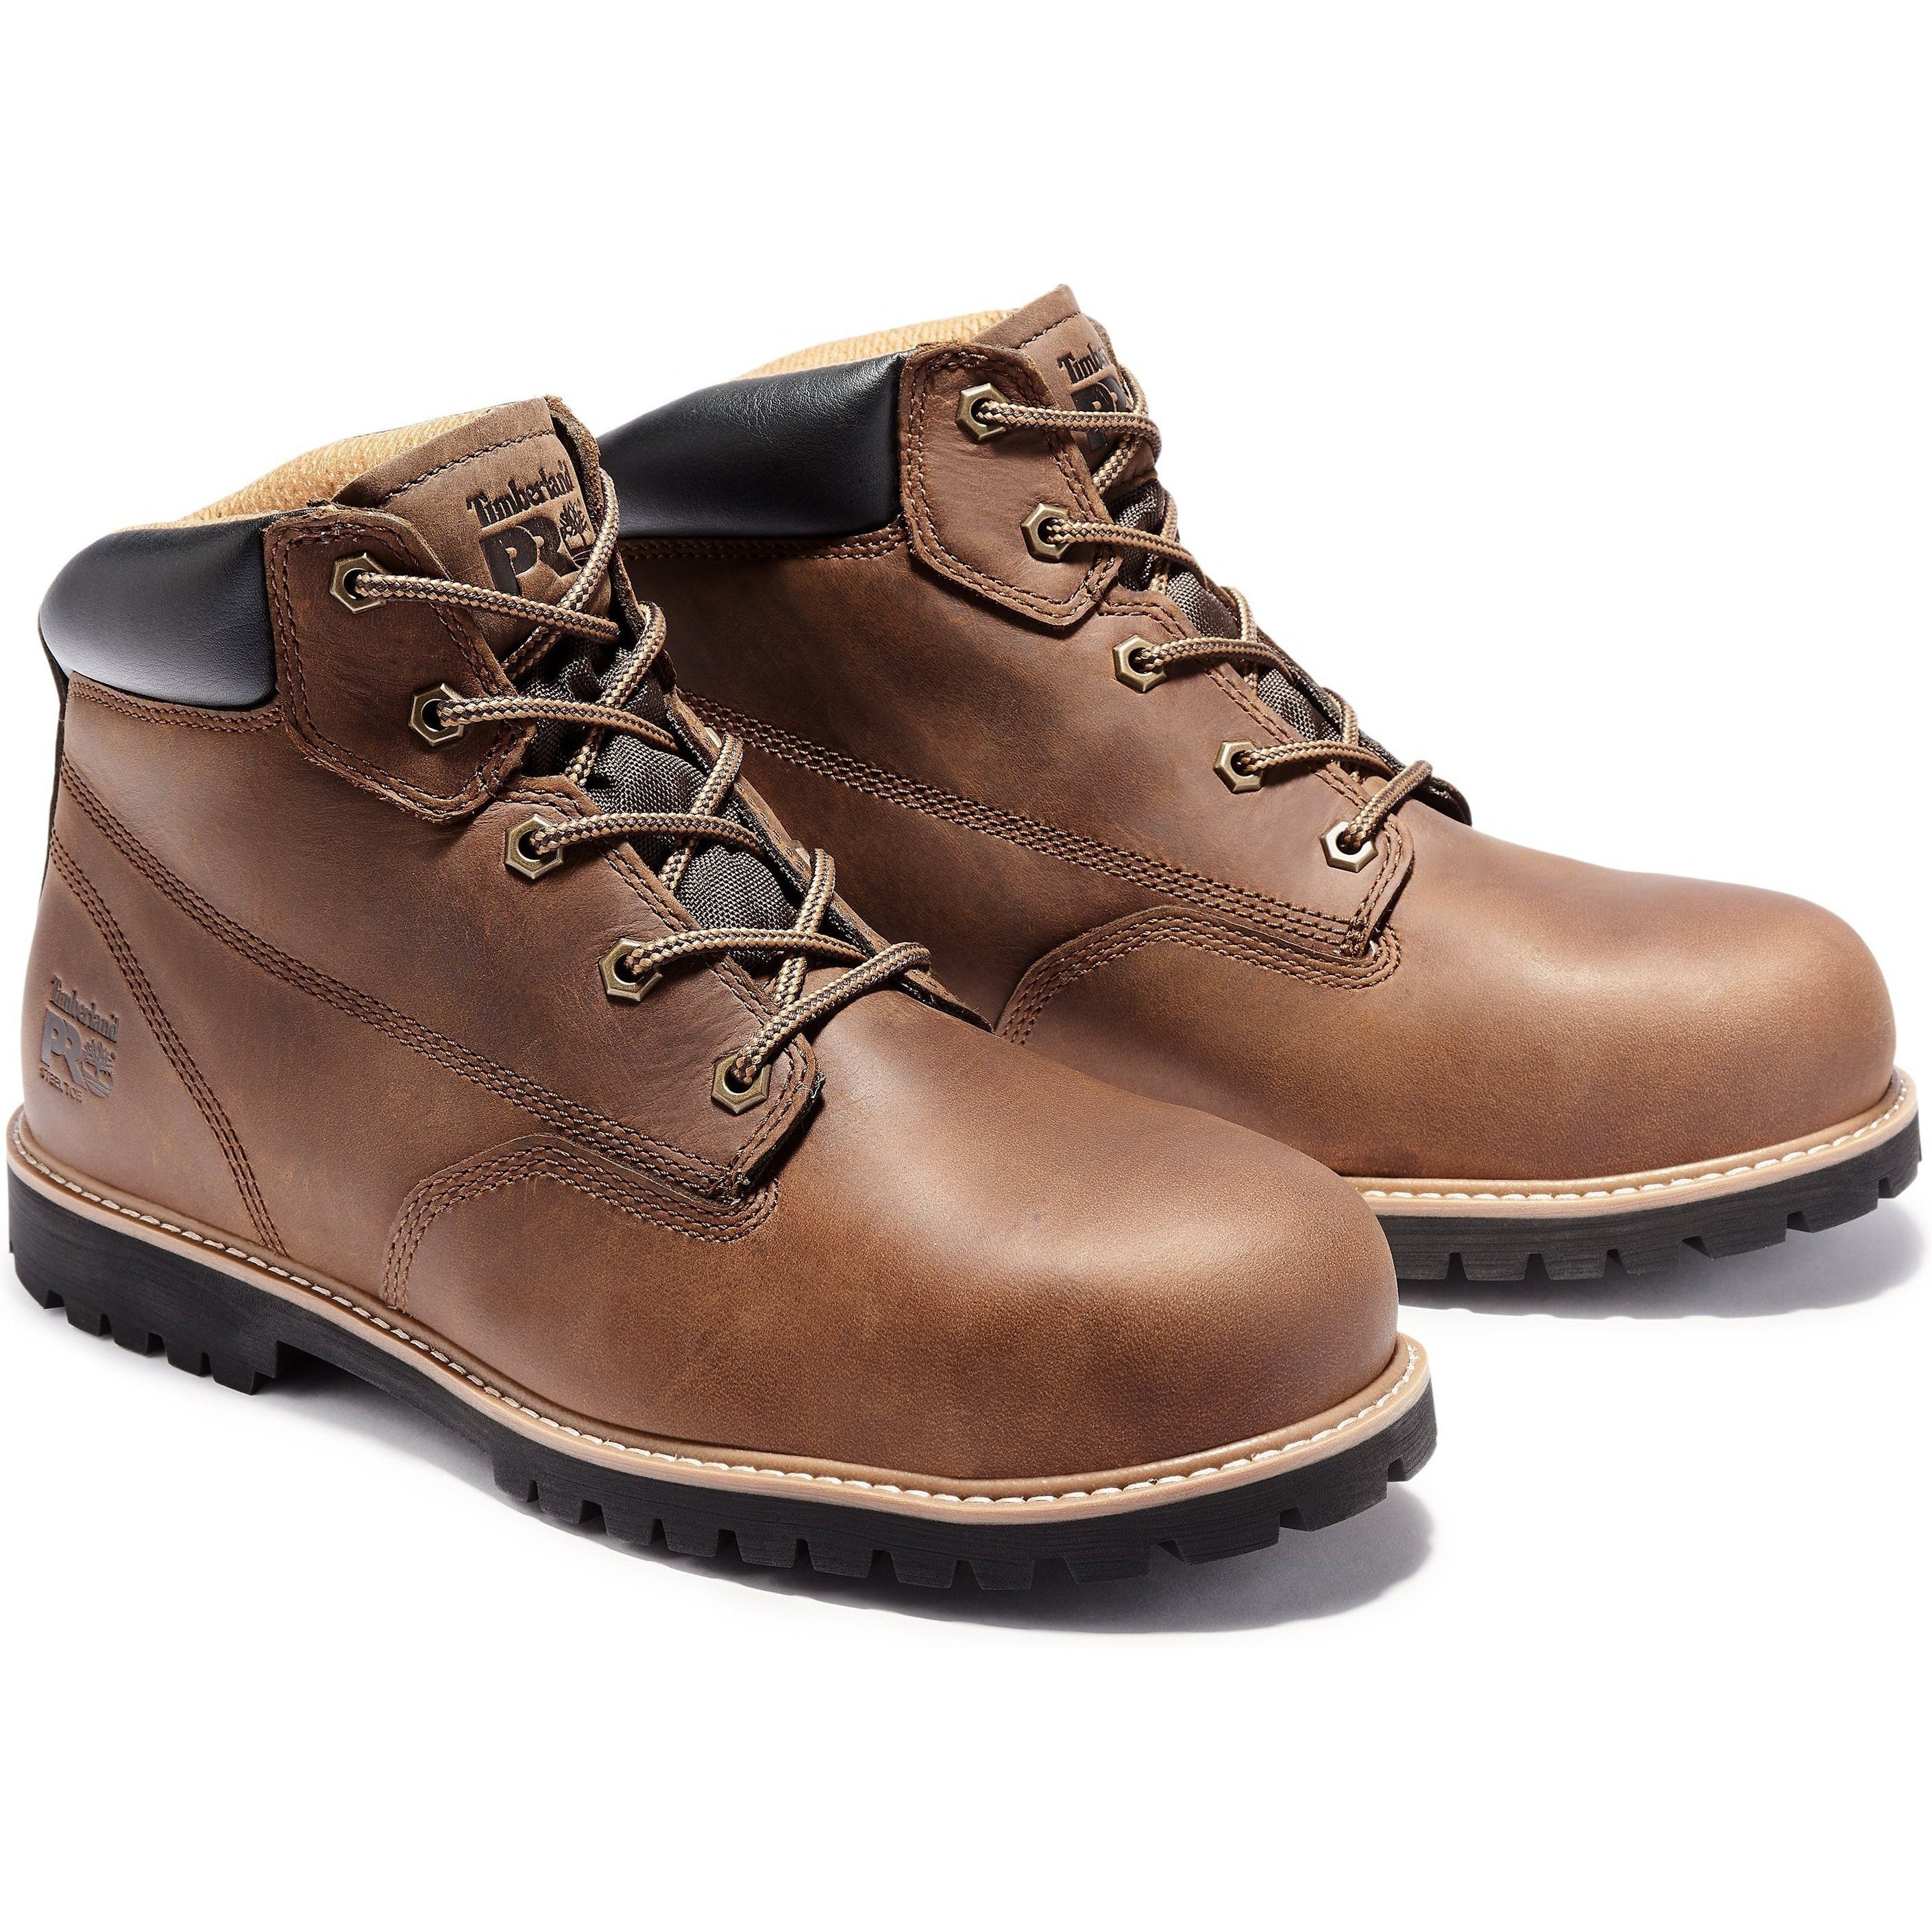 Timberland PRO Men's Gritstone 6" Steel Toe Work Boot - TB0A1Q8D214 8.5 / Medium / Brown - Overlook Boots